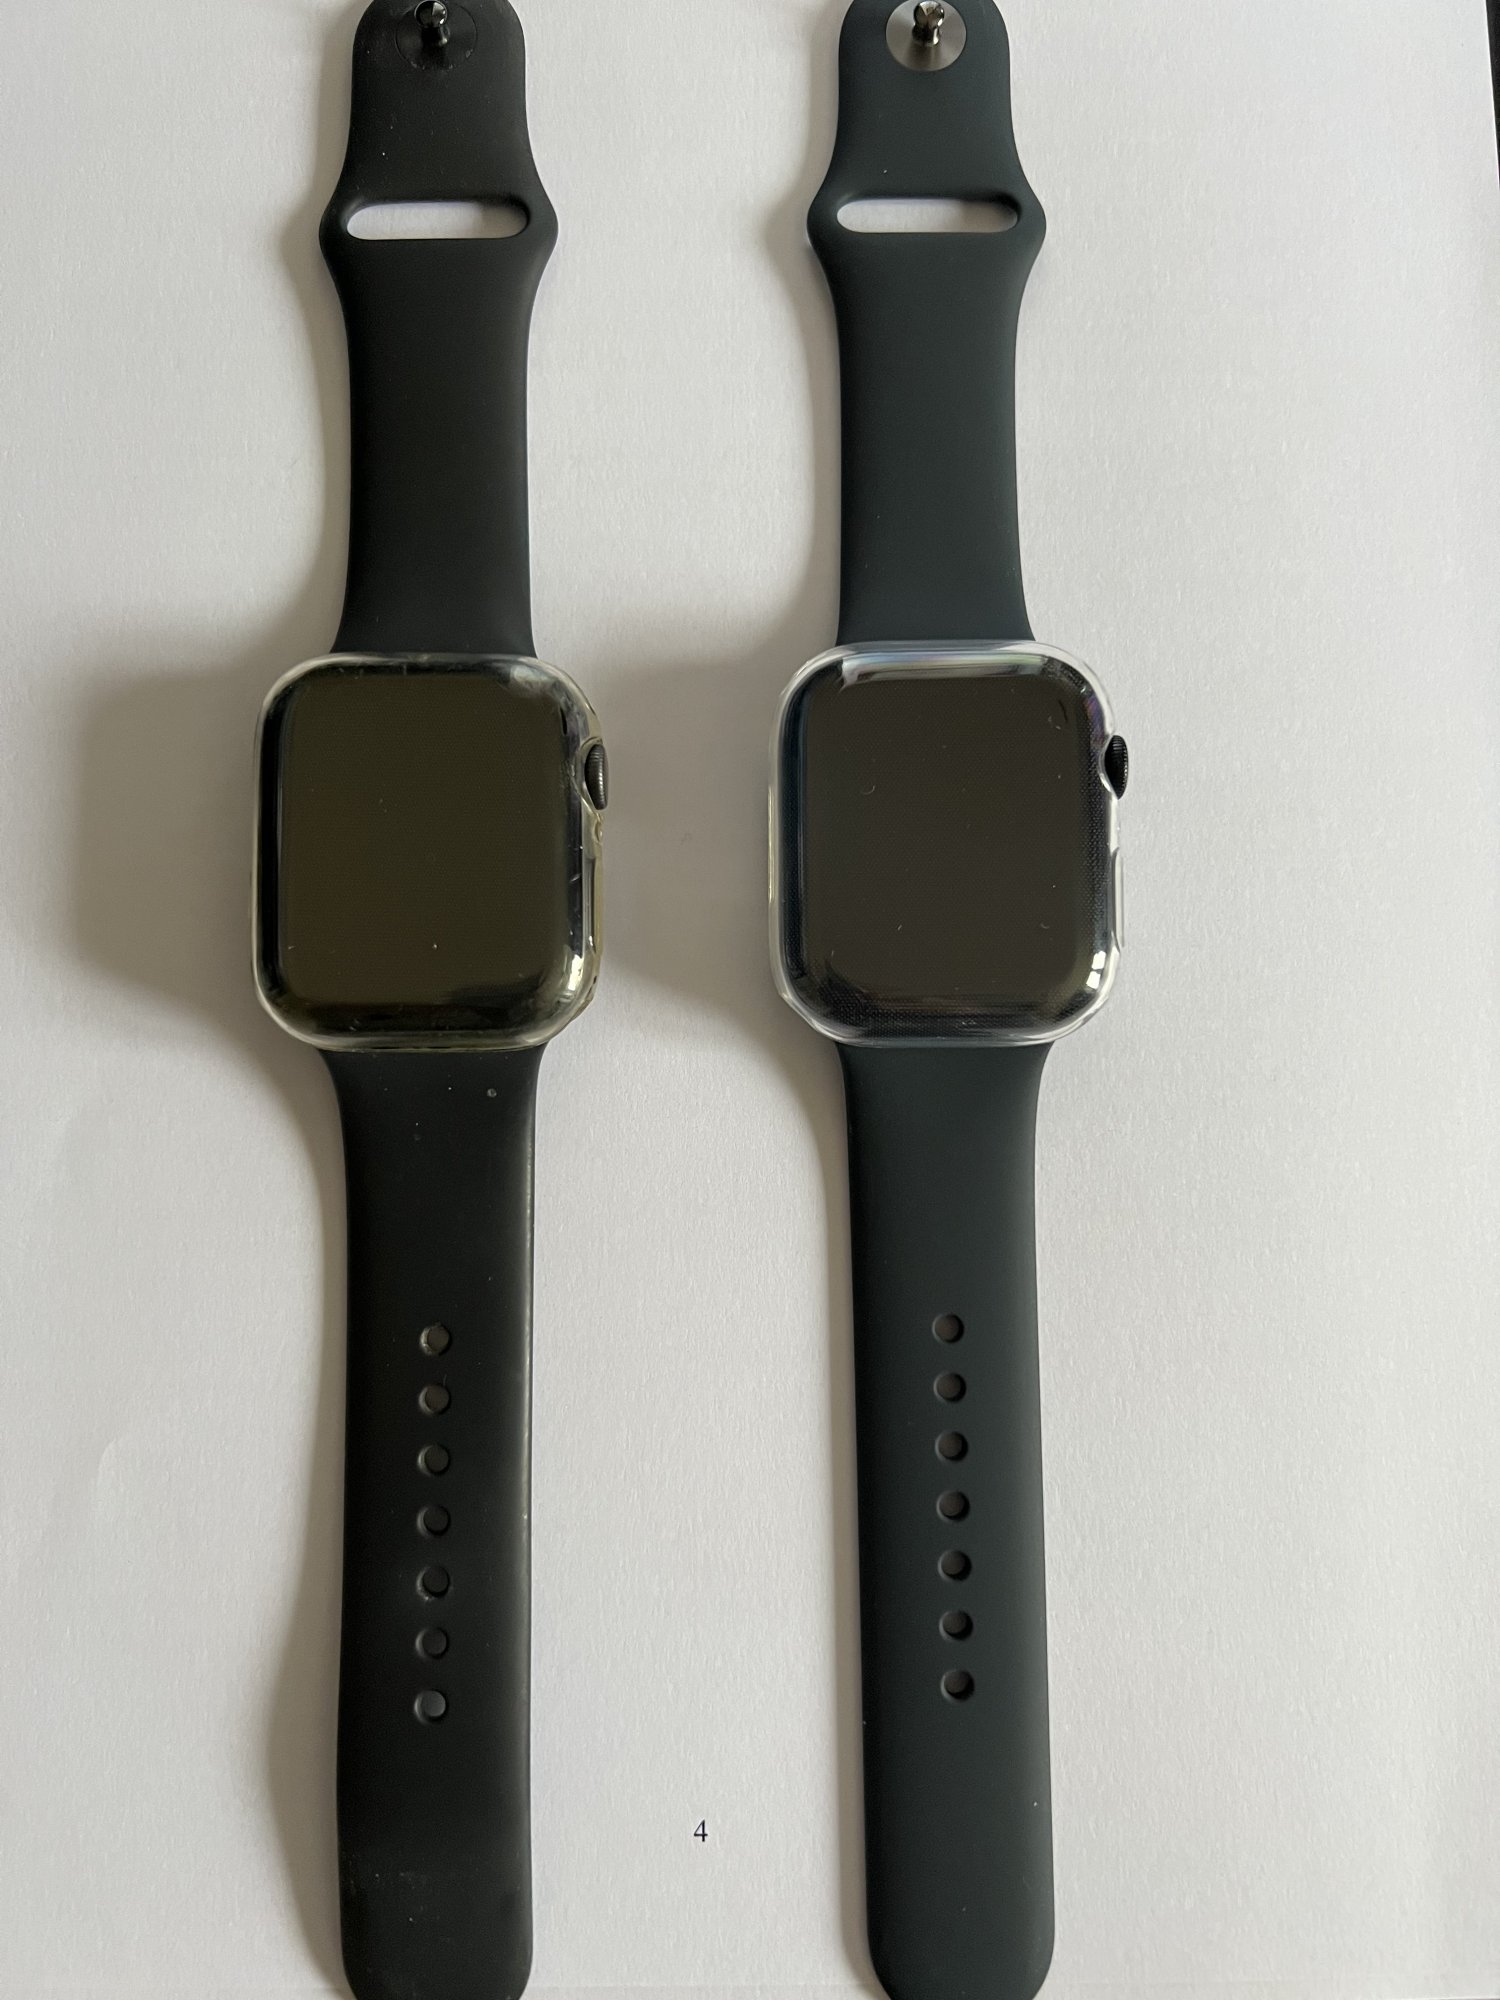 Apple Watch 6 space grey v watch 7 midnight pics | MacRumors Forums